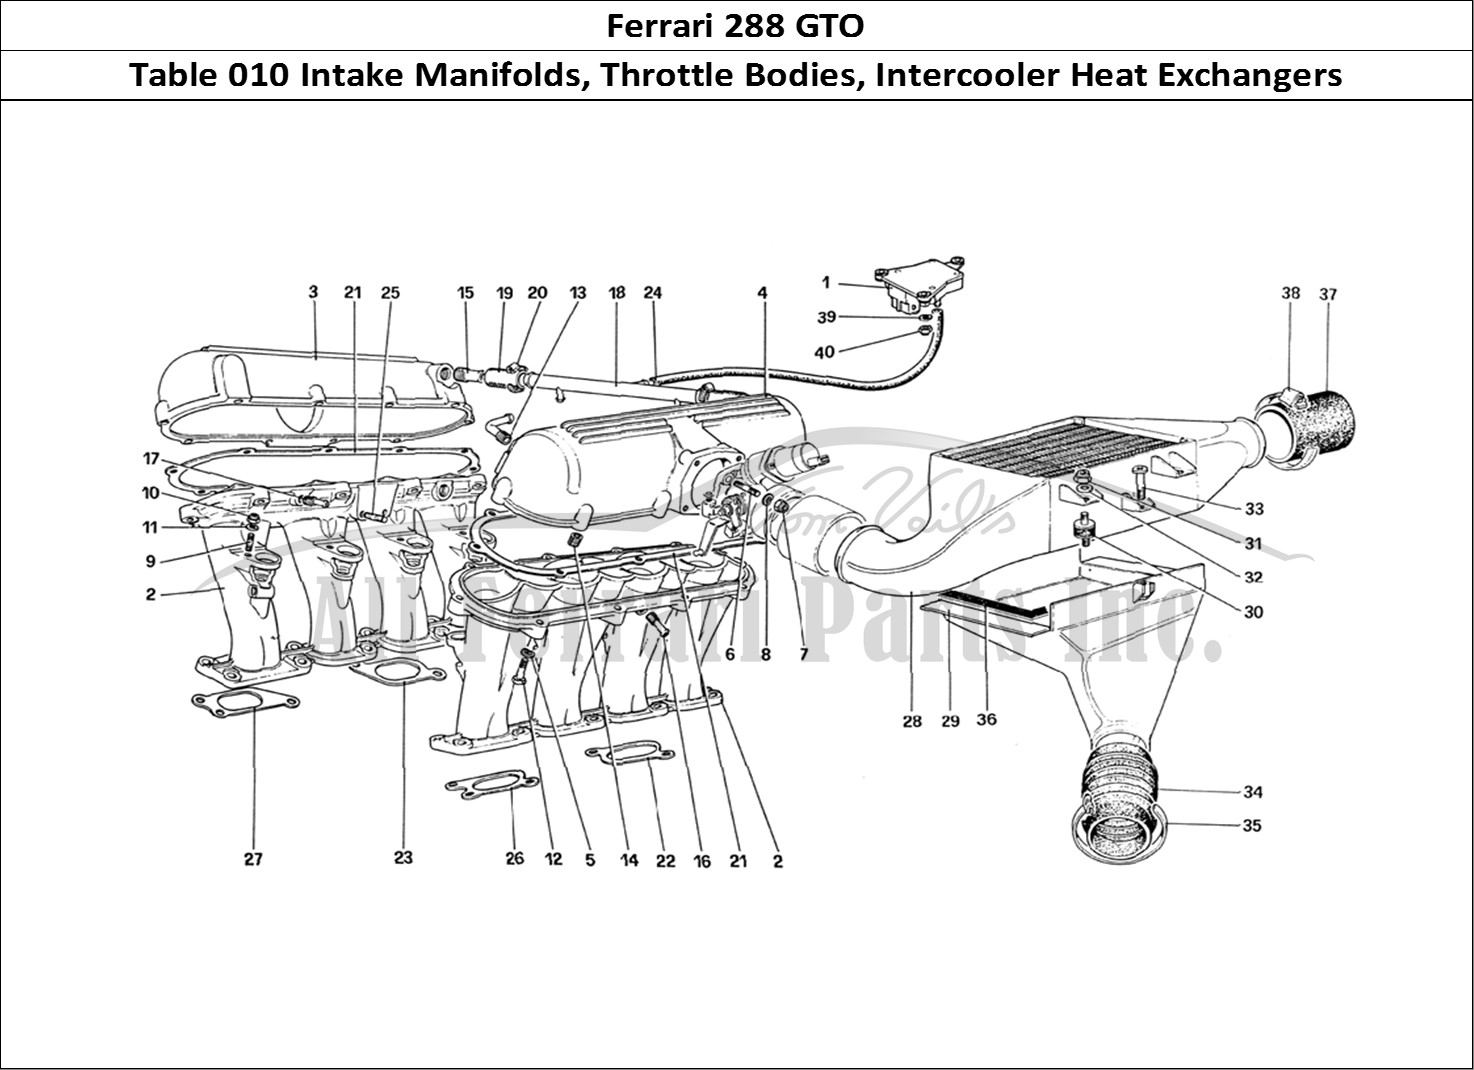 Ferrari Parts Ferrari 288 GTO Page 010 Exhaust Manifolds and Hea